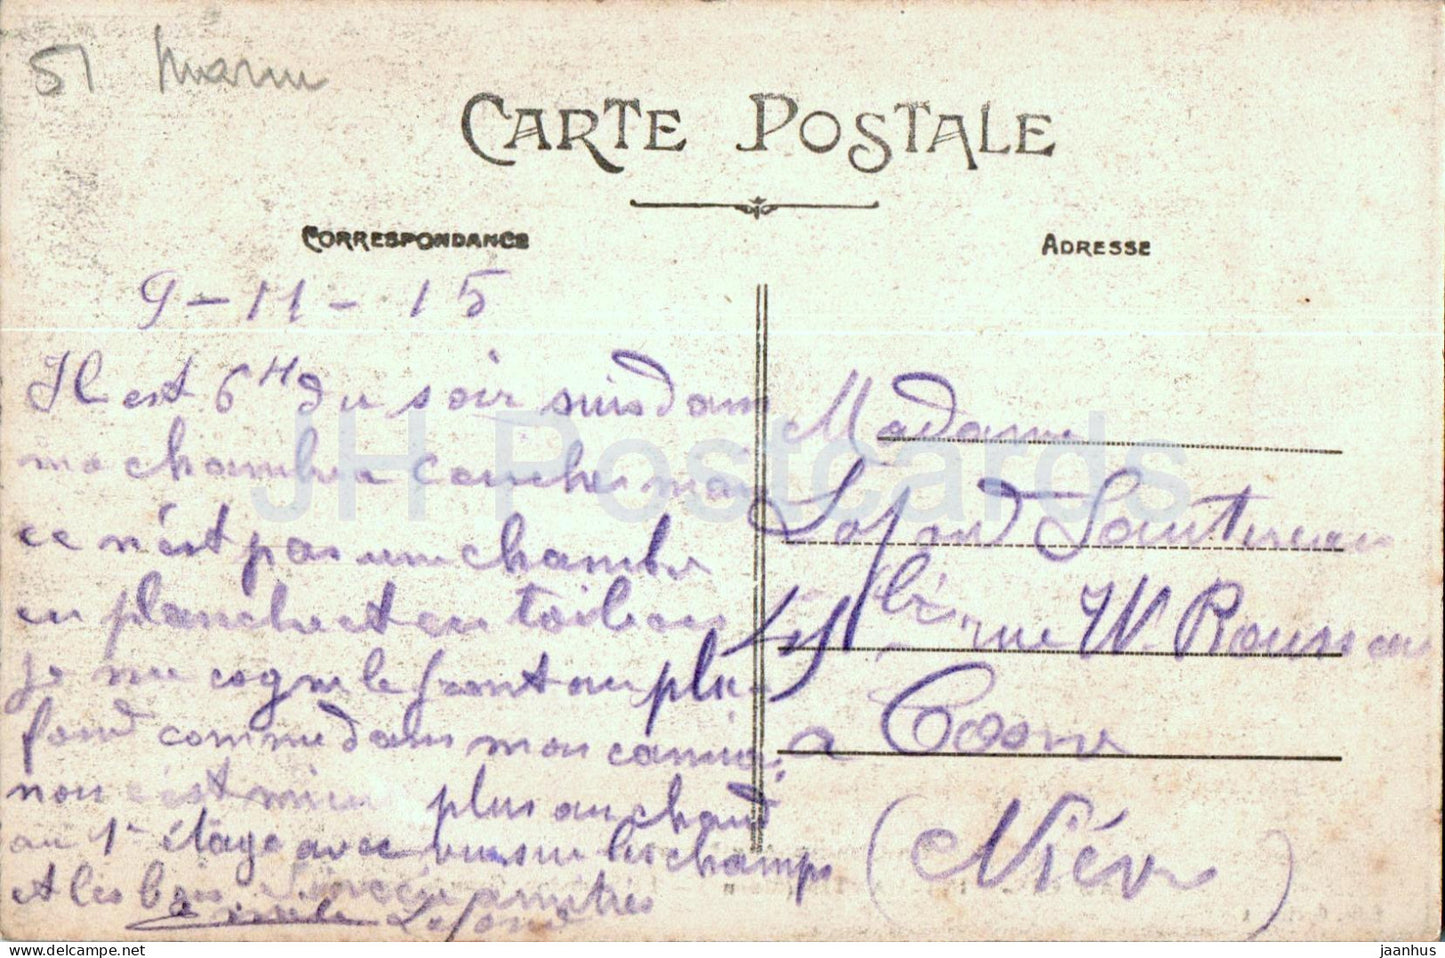 Ablois Saint Martin - Le Sourdon - Grande Source - La Champagne Illustree - alte Postkarte - 1915 - Frankreich - gebraucht 